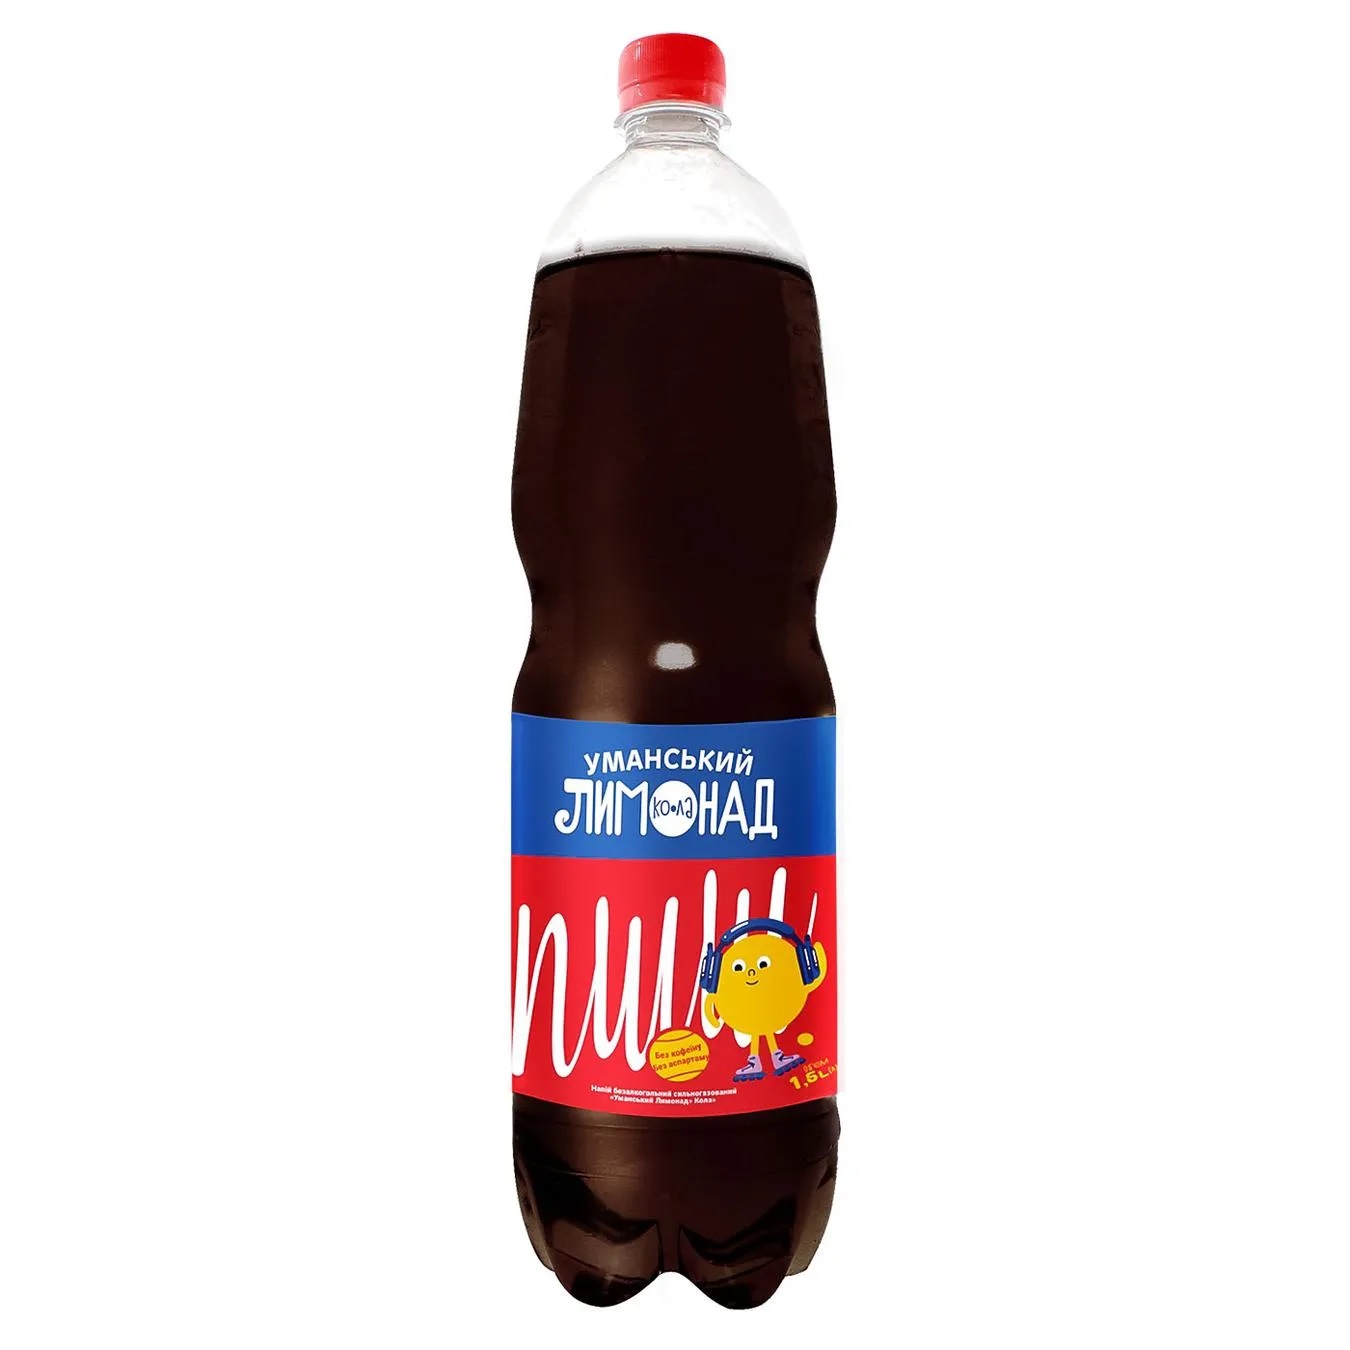 Uman Limonade Cola carbonated drink 1.5l